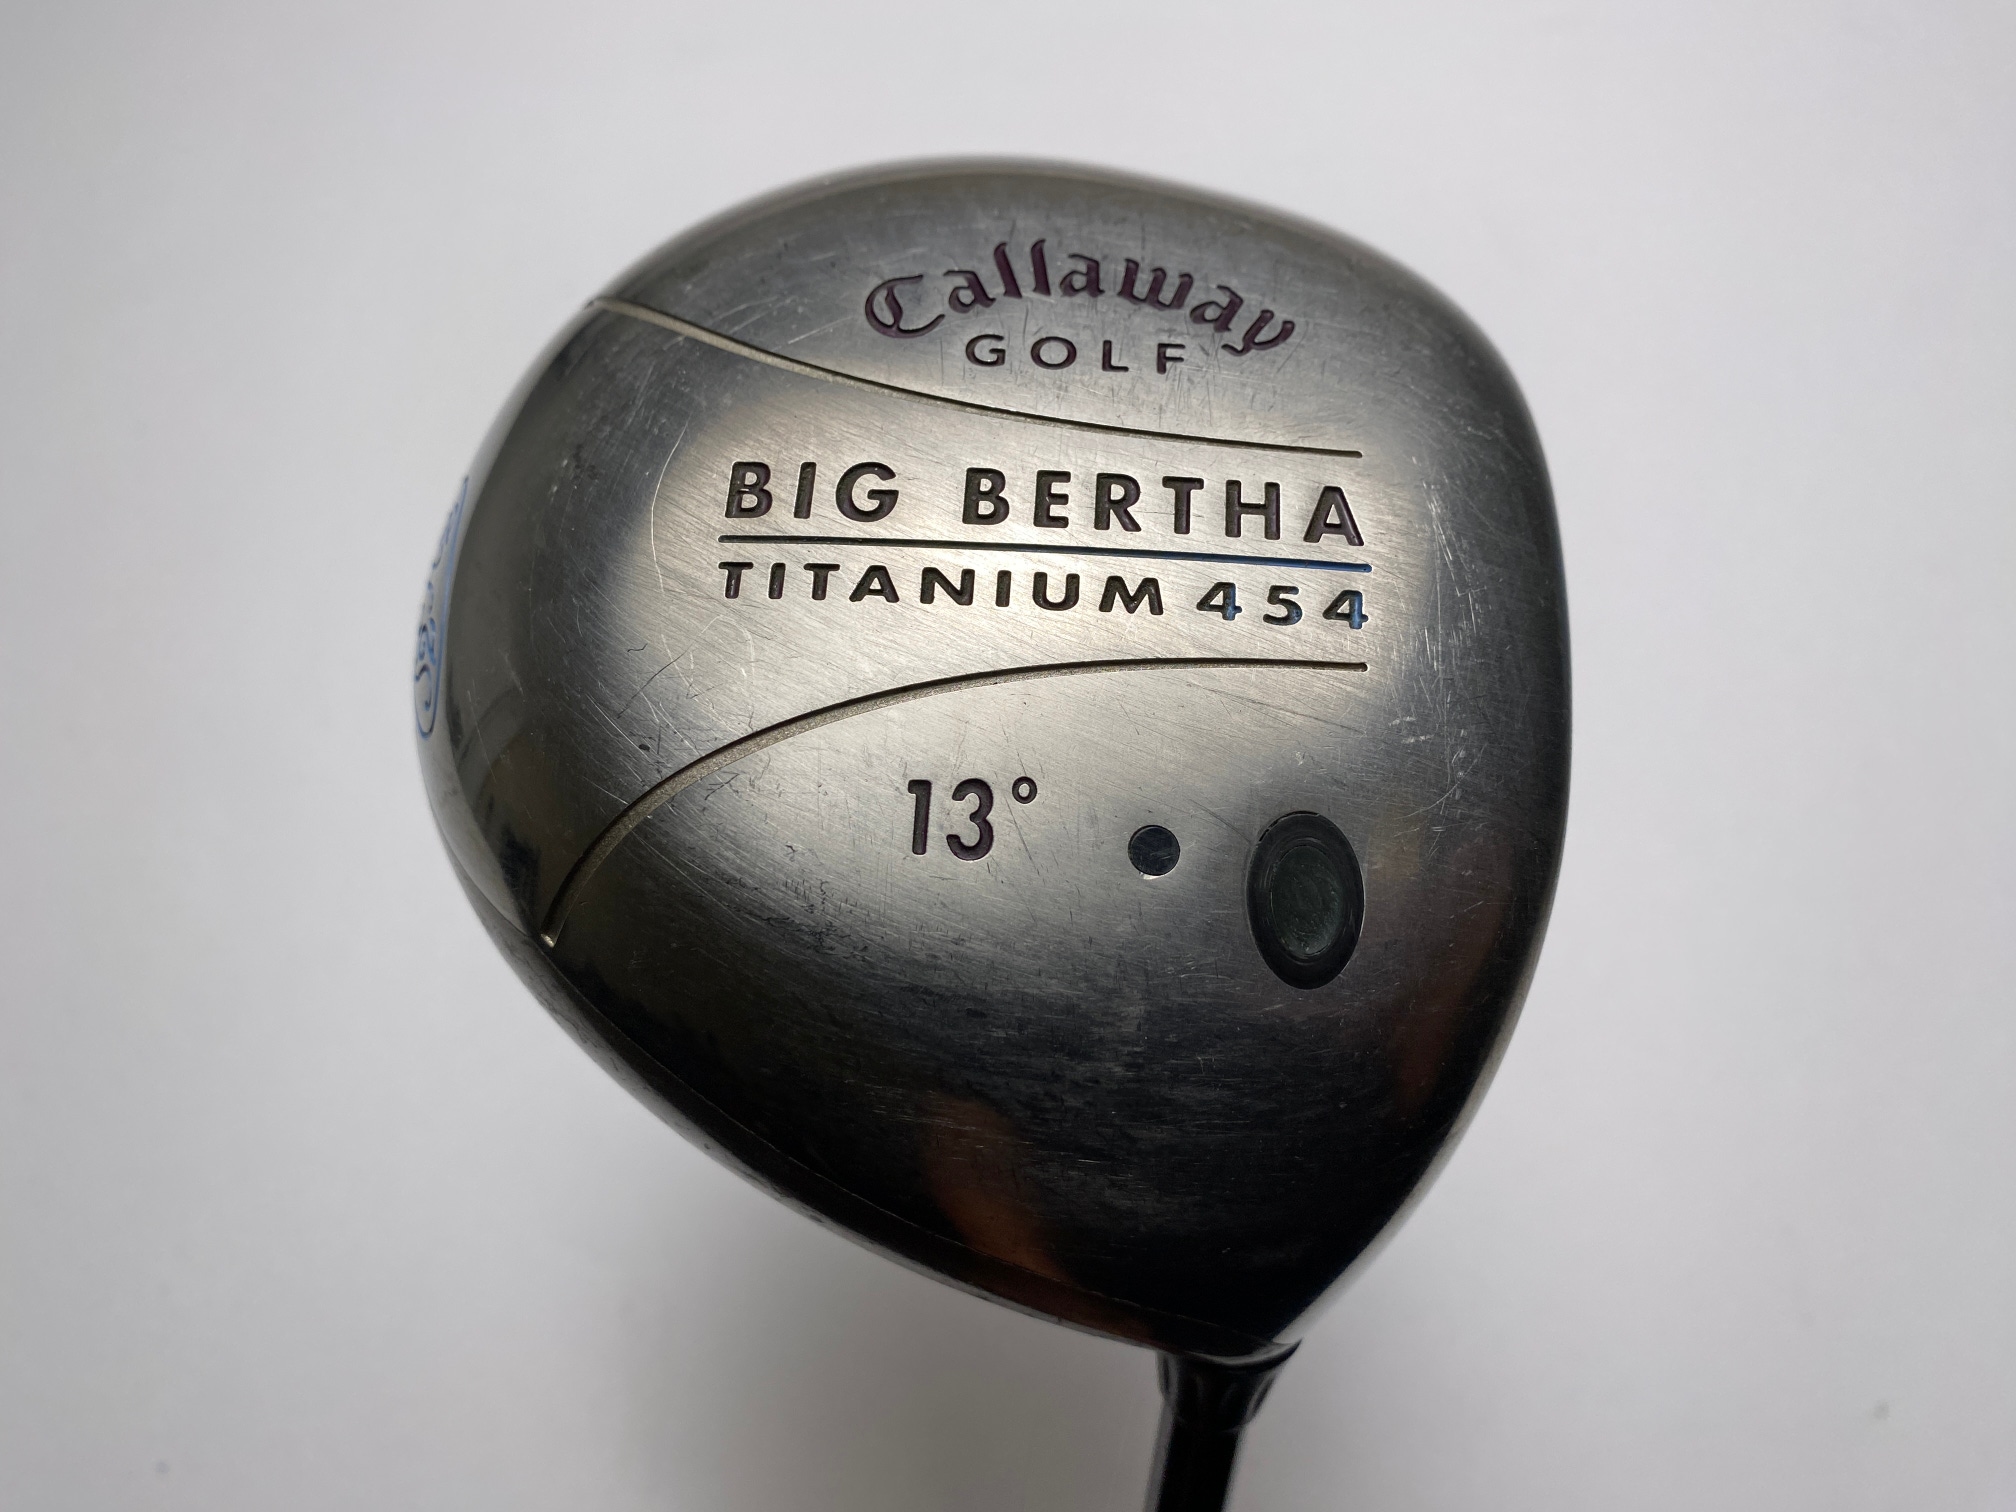 Callaway Big Bertha Titanium 454 Driver 13* Big Bertha Gems 55 Ladies RH